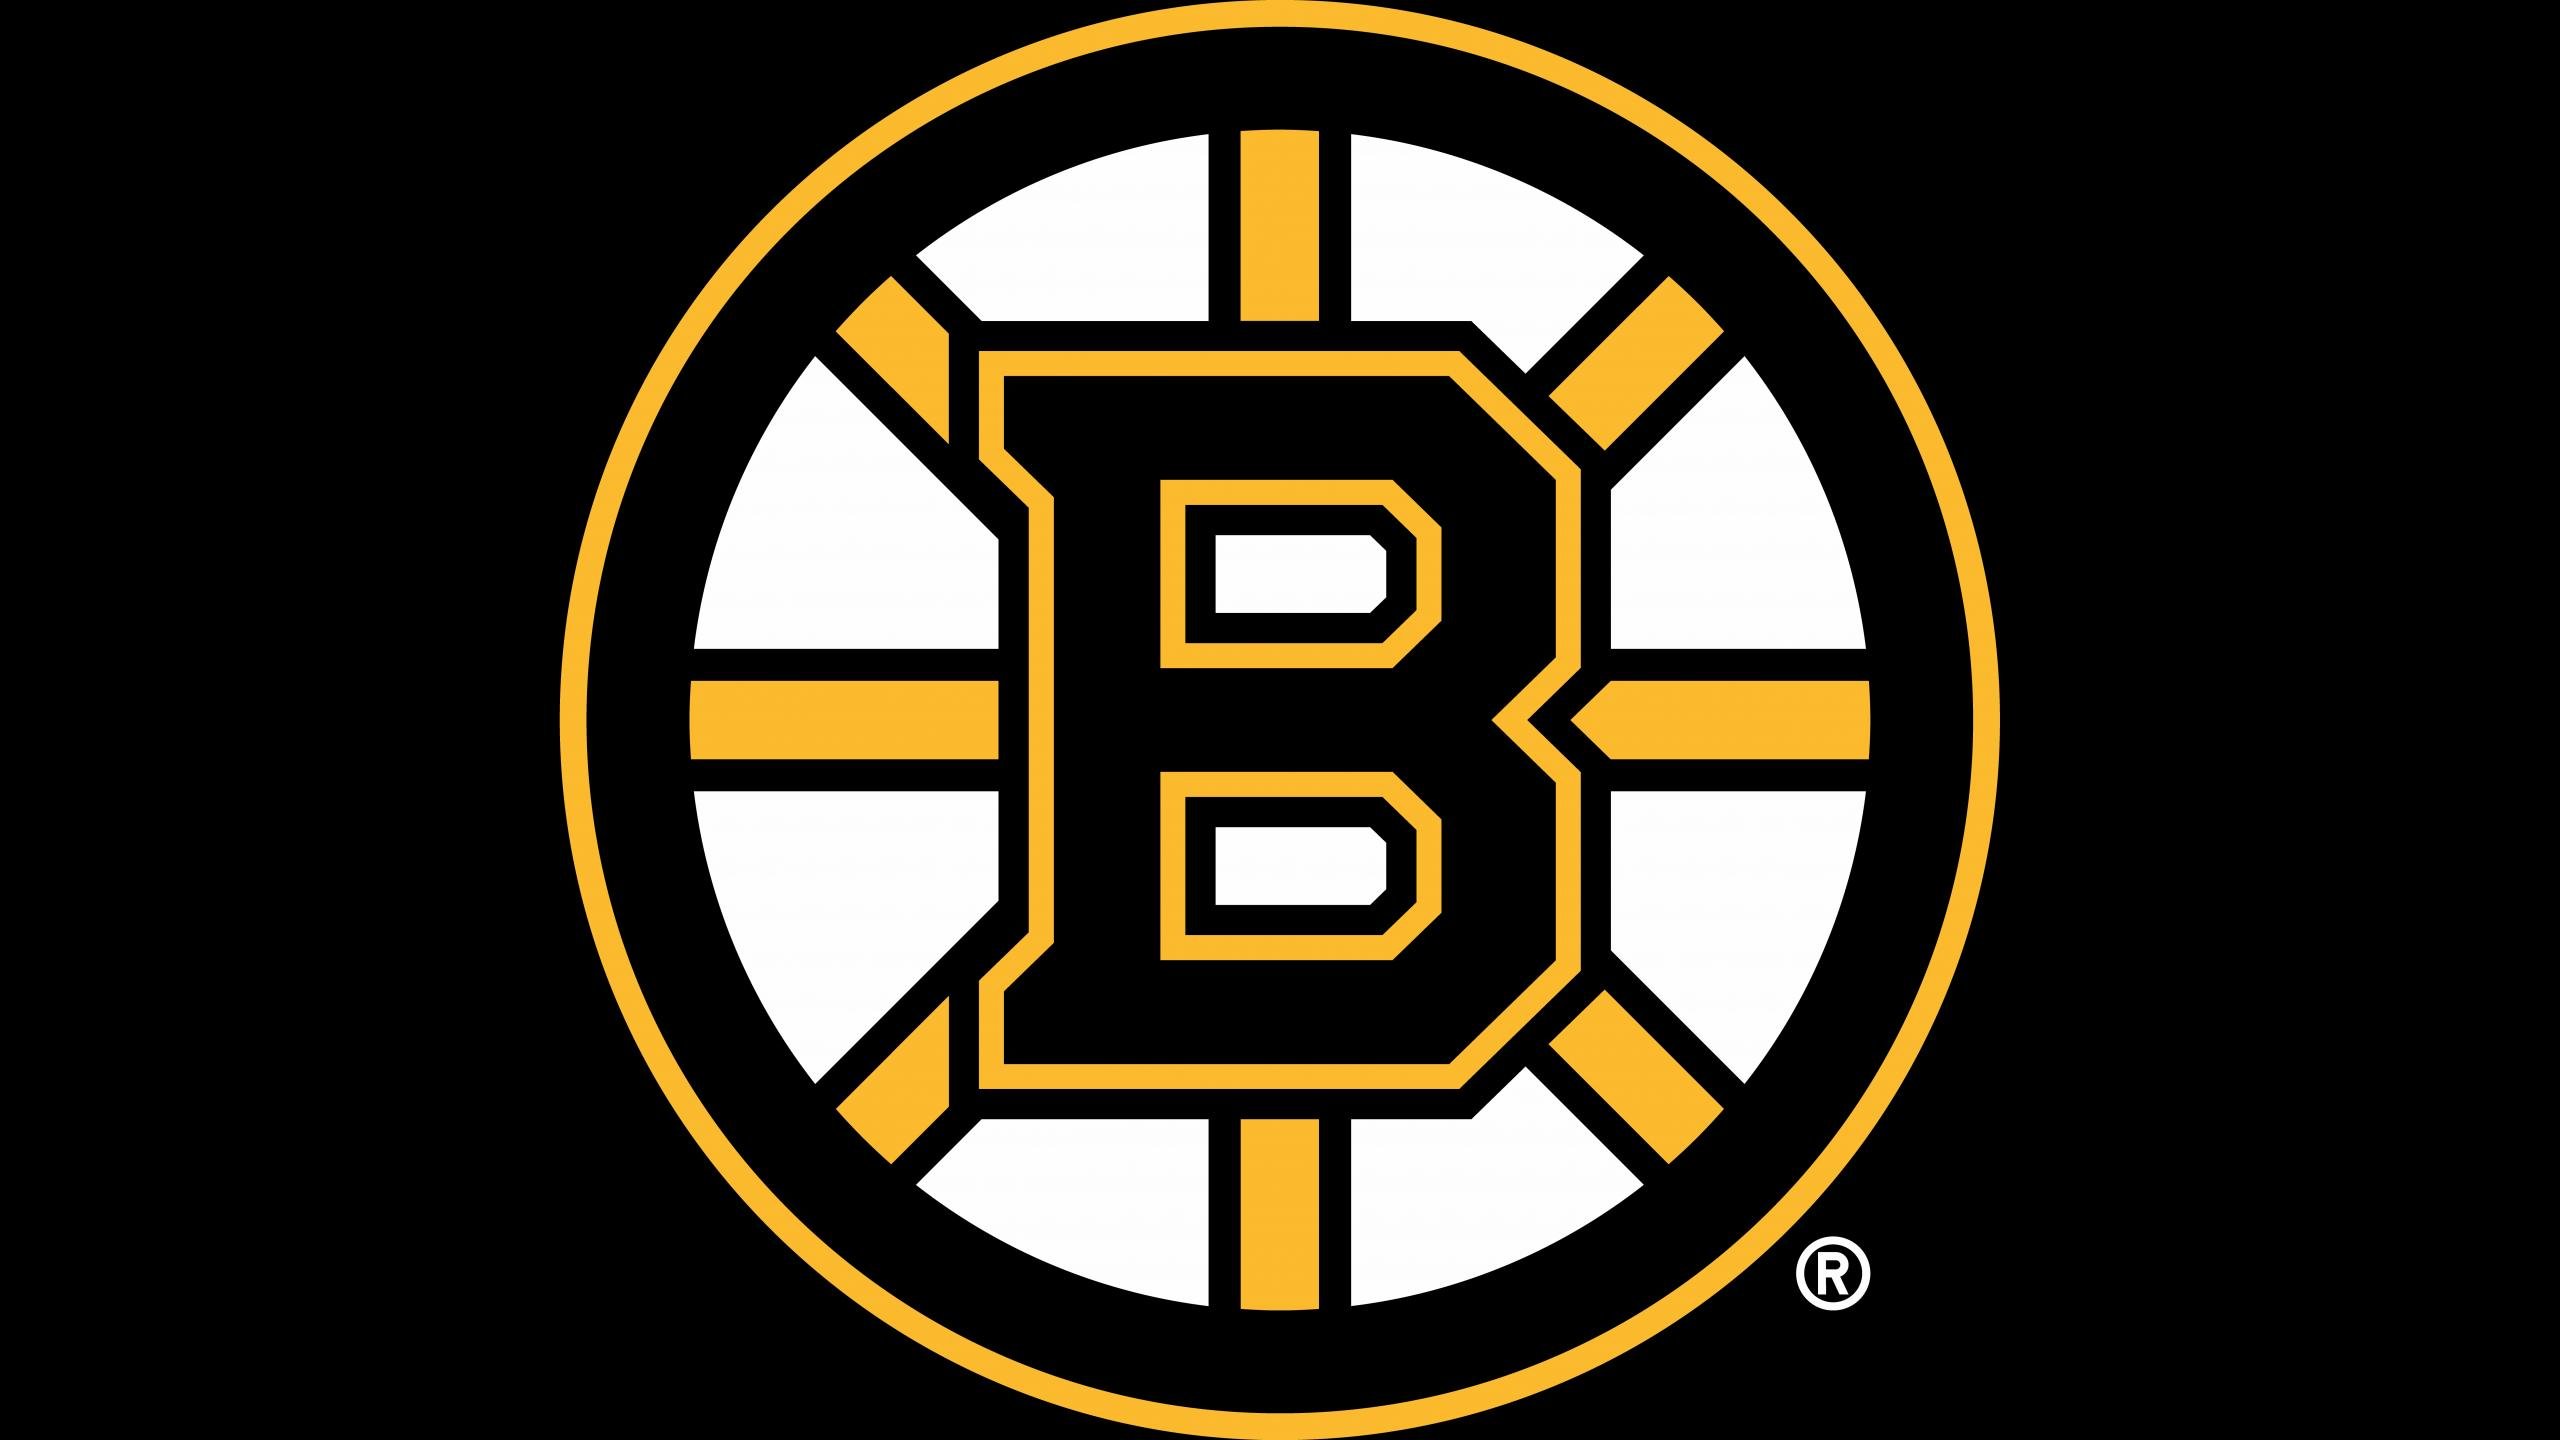 Best Boston Bruins wallpaper ID:334400 for High Resolution hd 2560x1440 computer